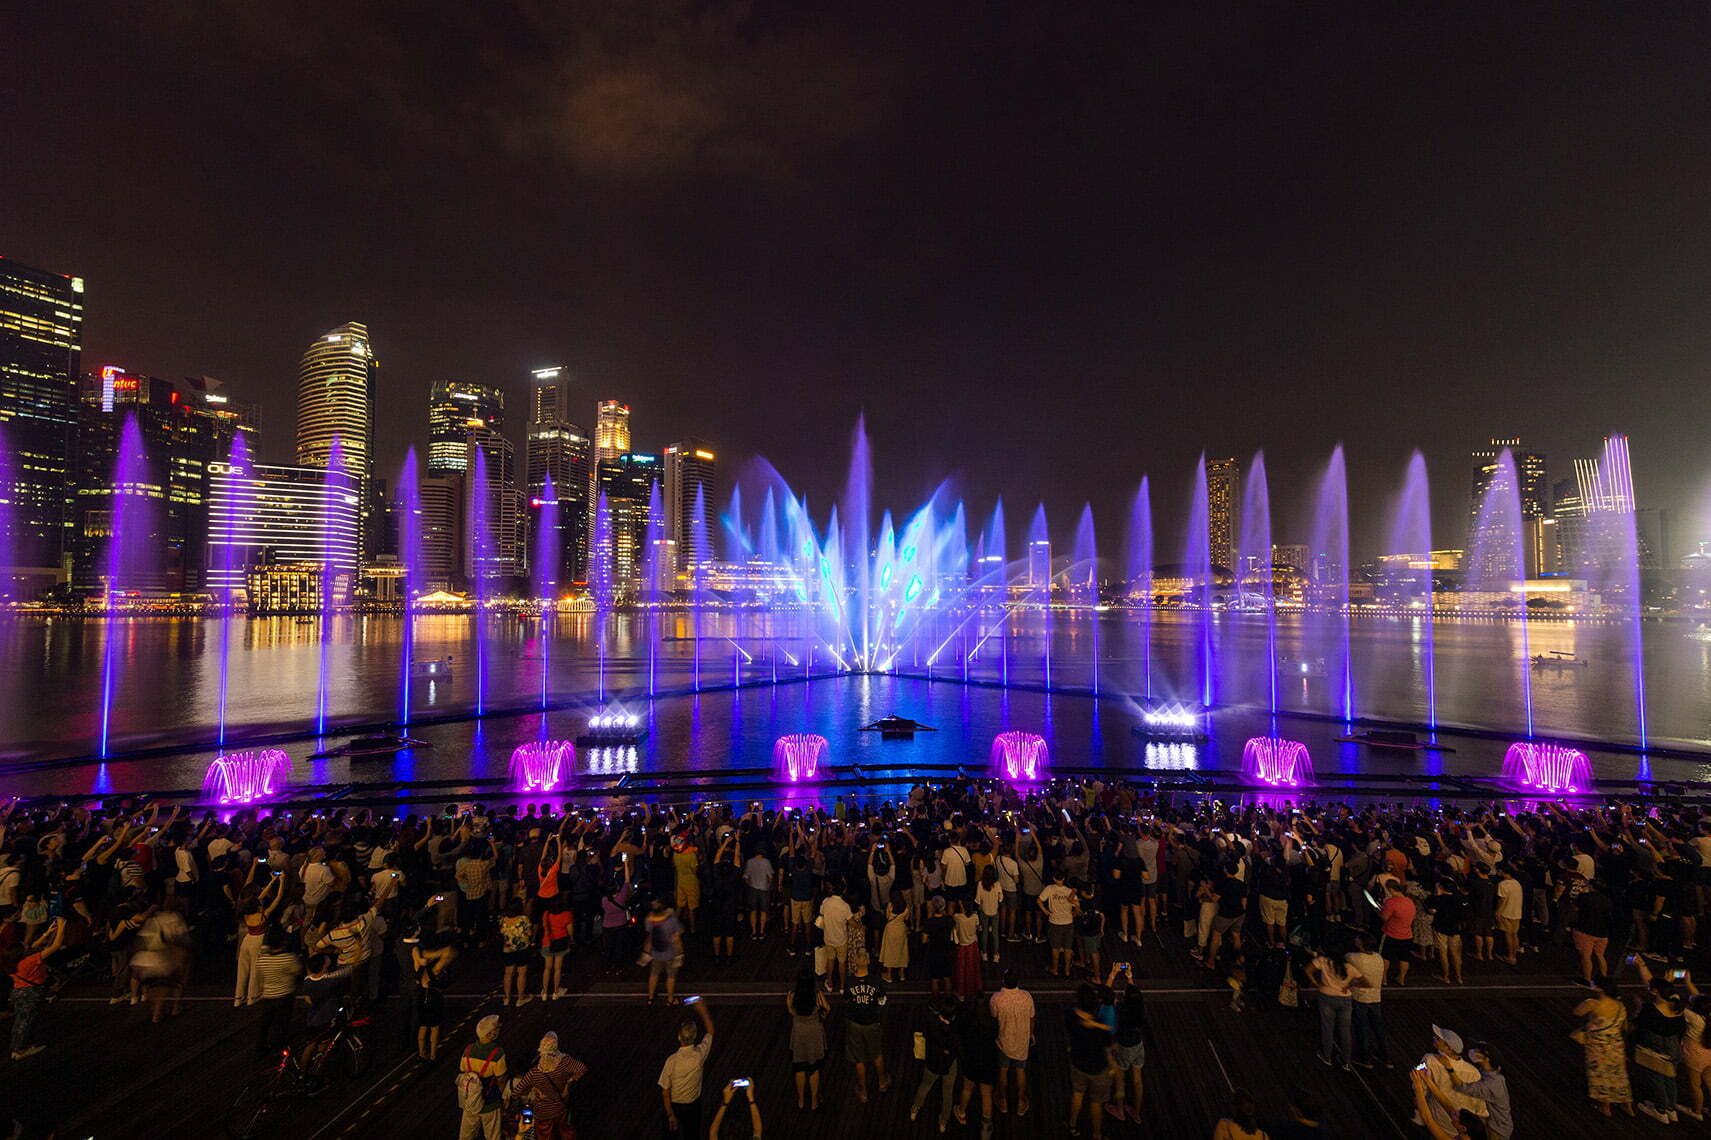 Top Gun: Maverick – A Light, Water & Pyrotechnic Extravaganza at Marina Bay Sands